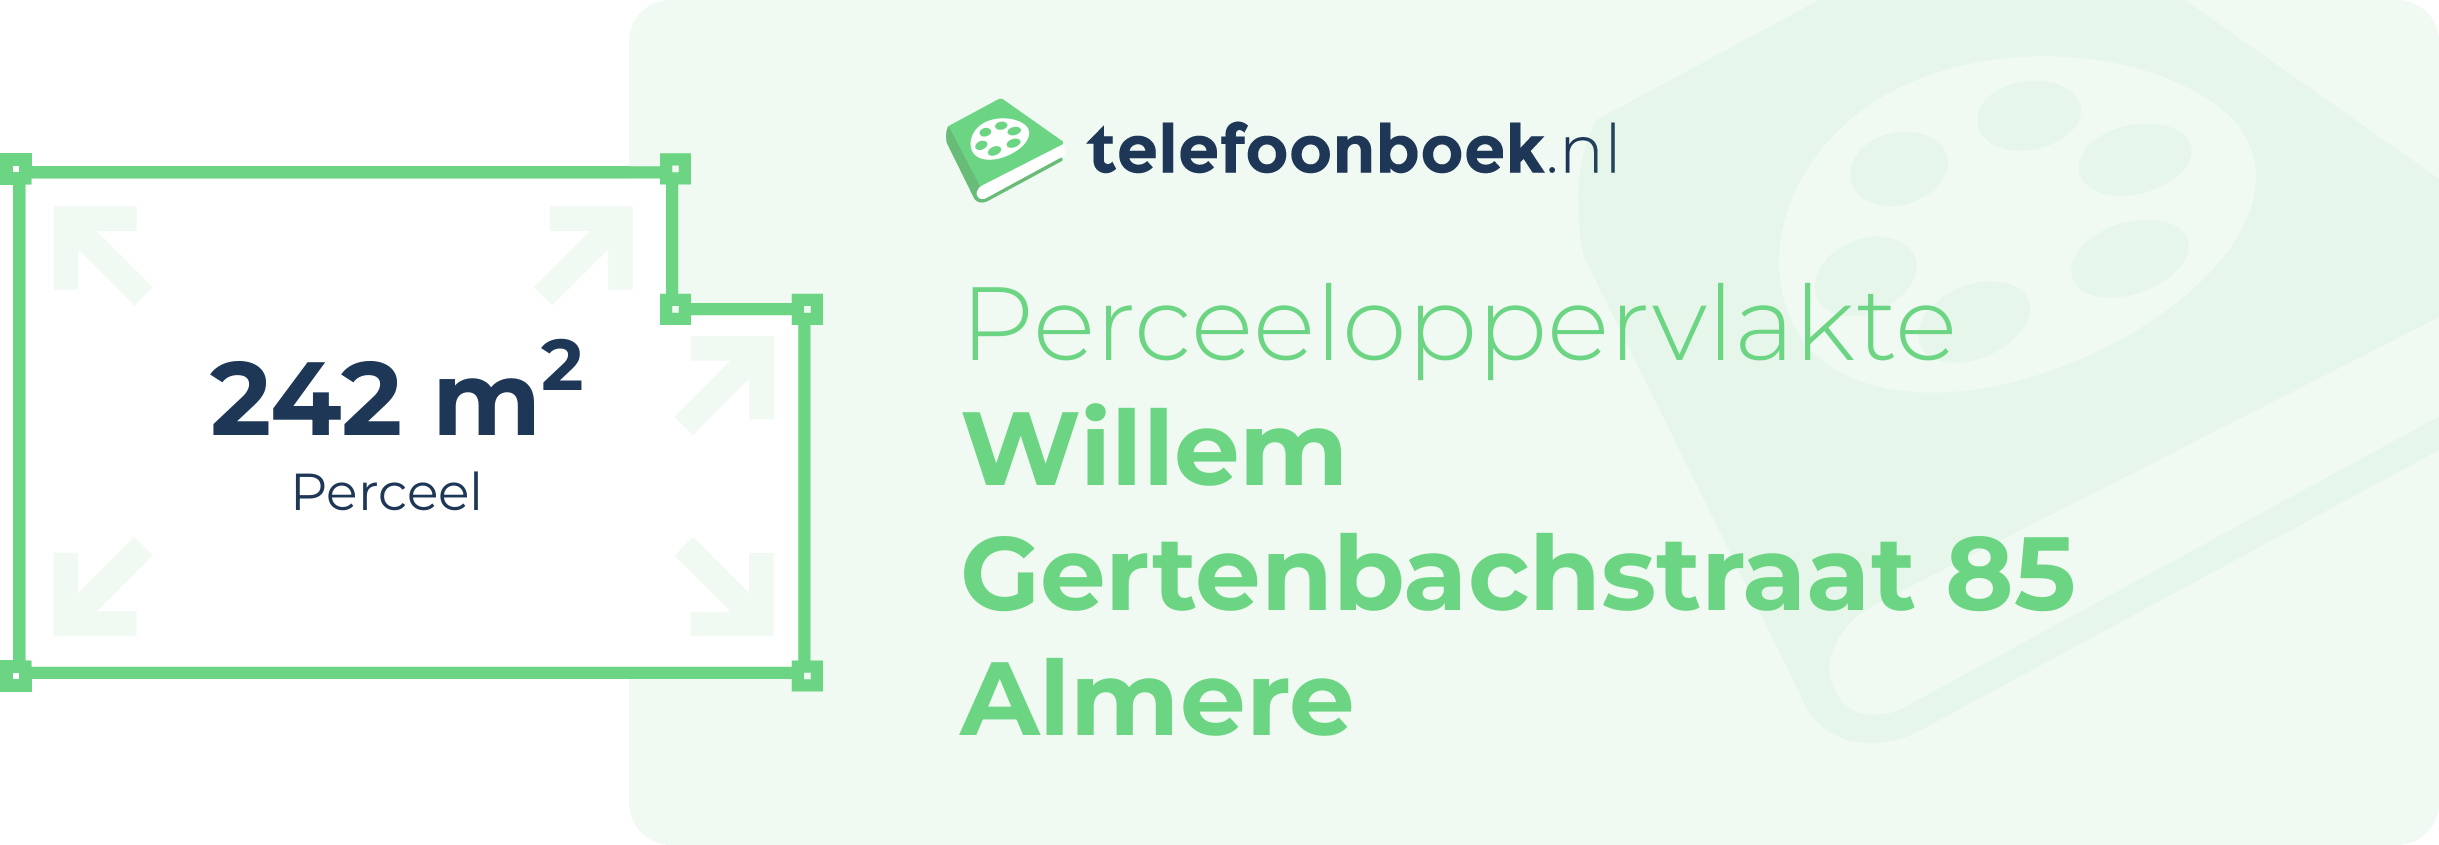 Perceeloppervlakte Willem Gertenbachstraat 85 Almere